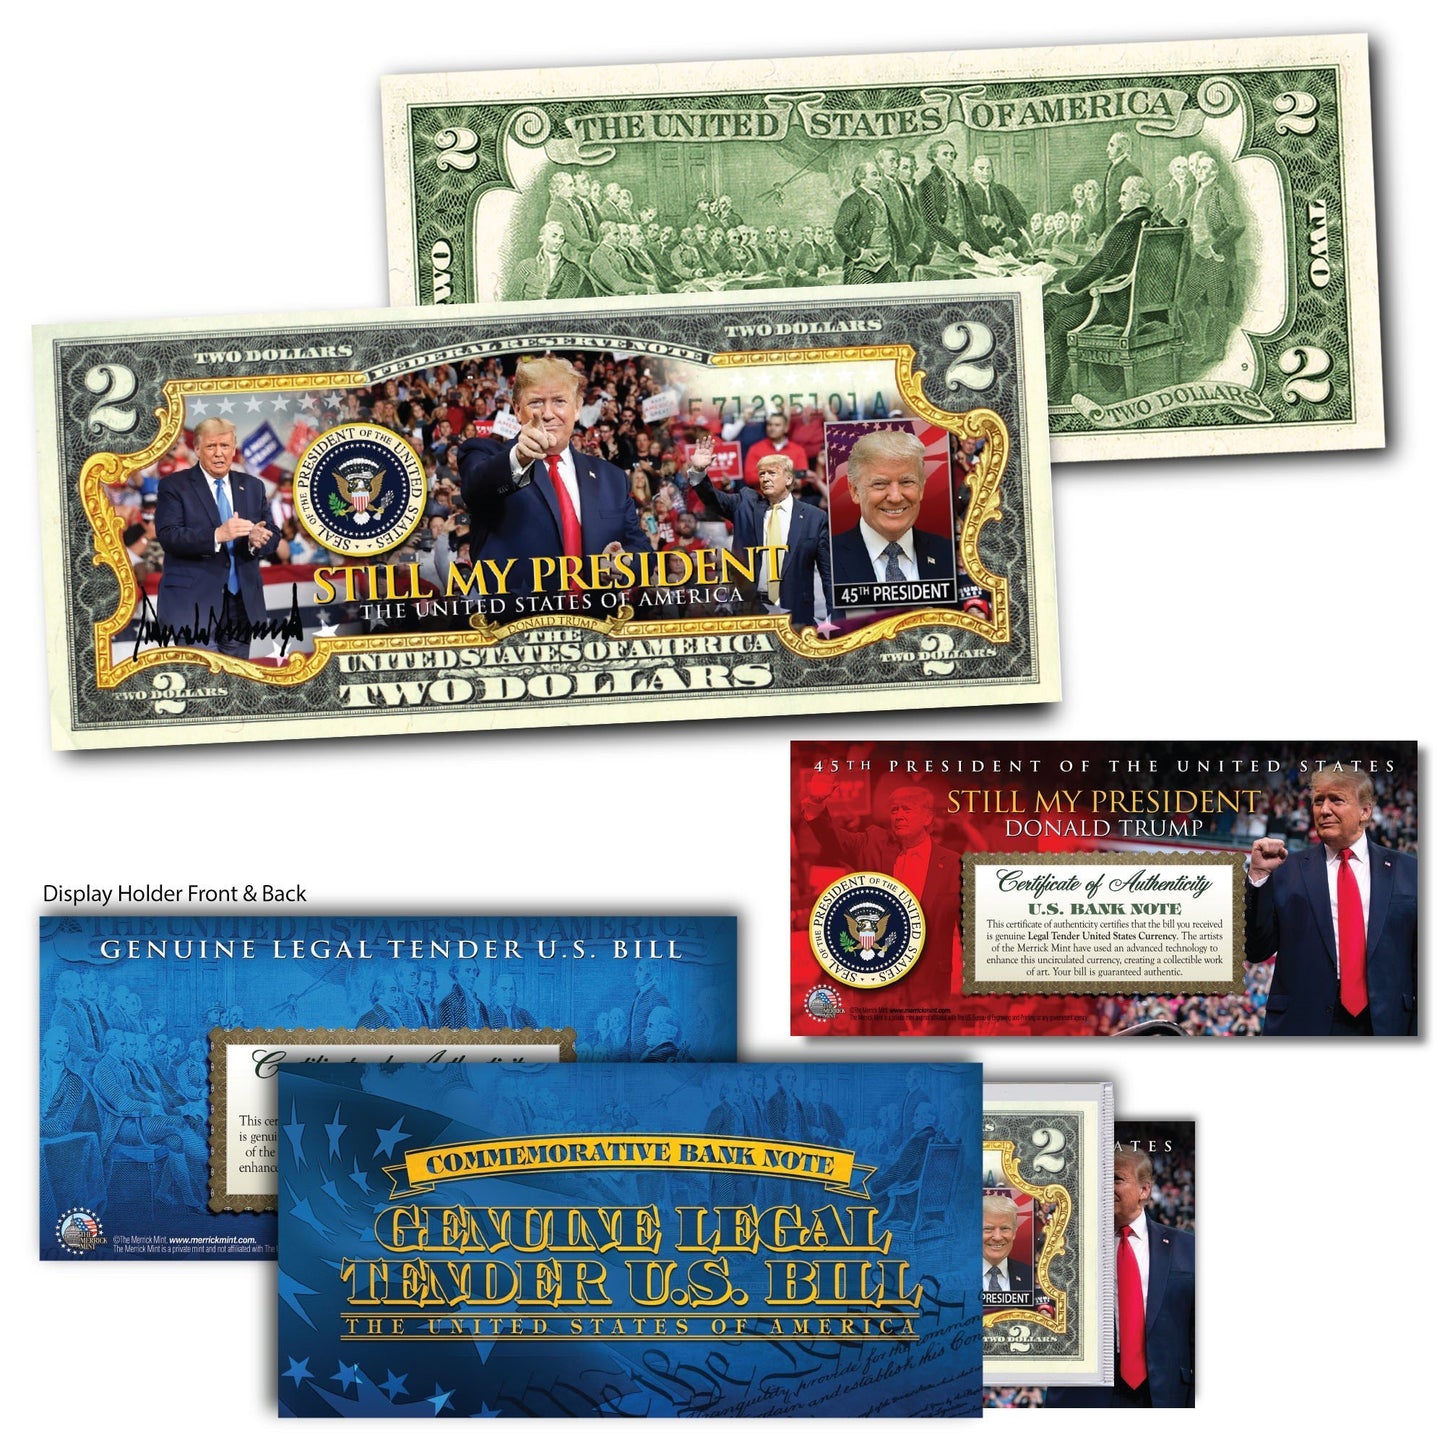 Donald Trump - "Still My President" - Genuine Legal Tender U.S. $2 Bill - Proud Patriots